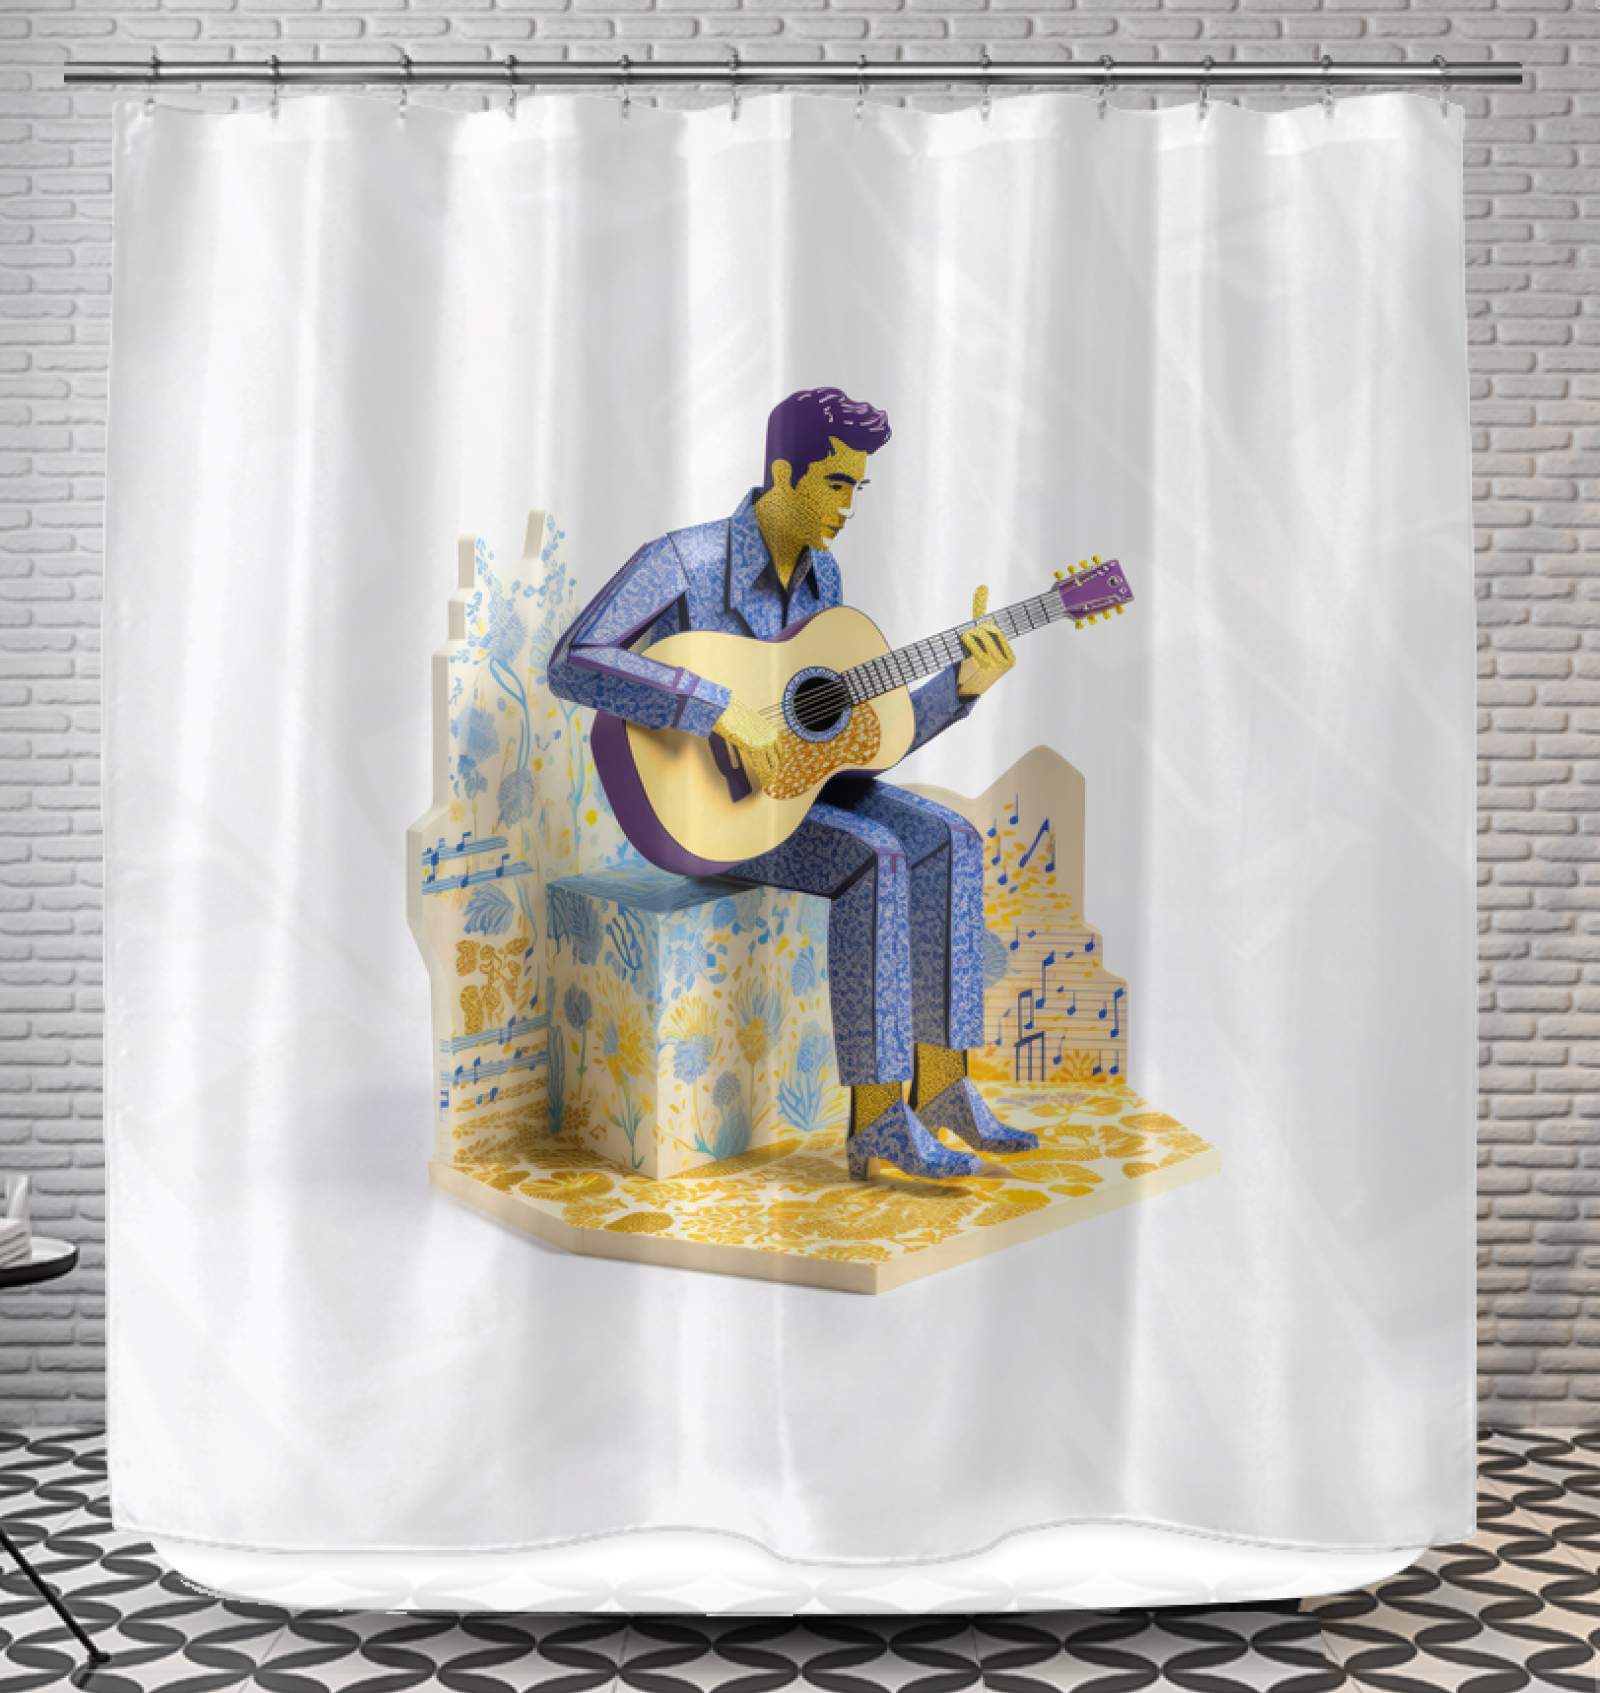 Artistic Whimsical Folds Shower Curtain adding a unique flair to bathroom decor.